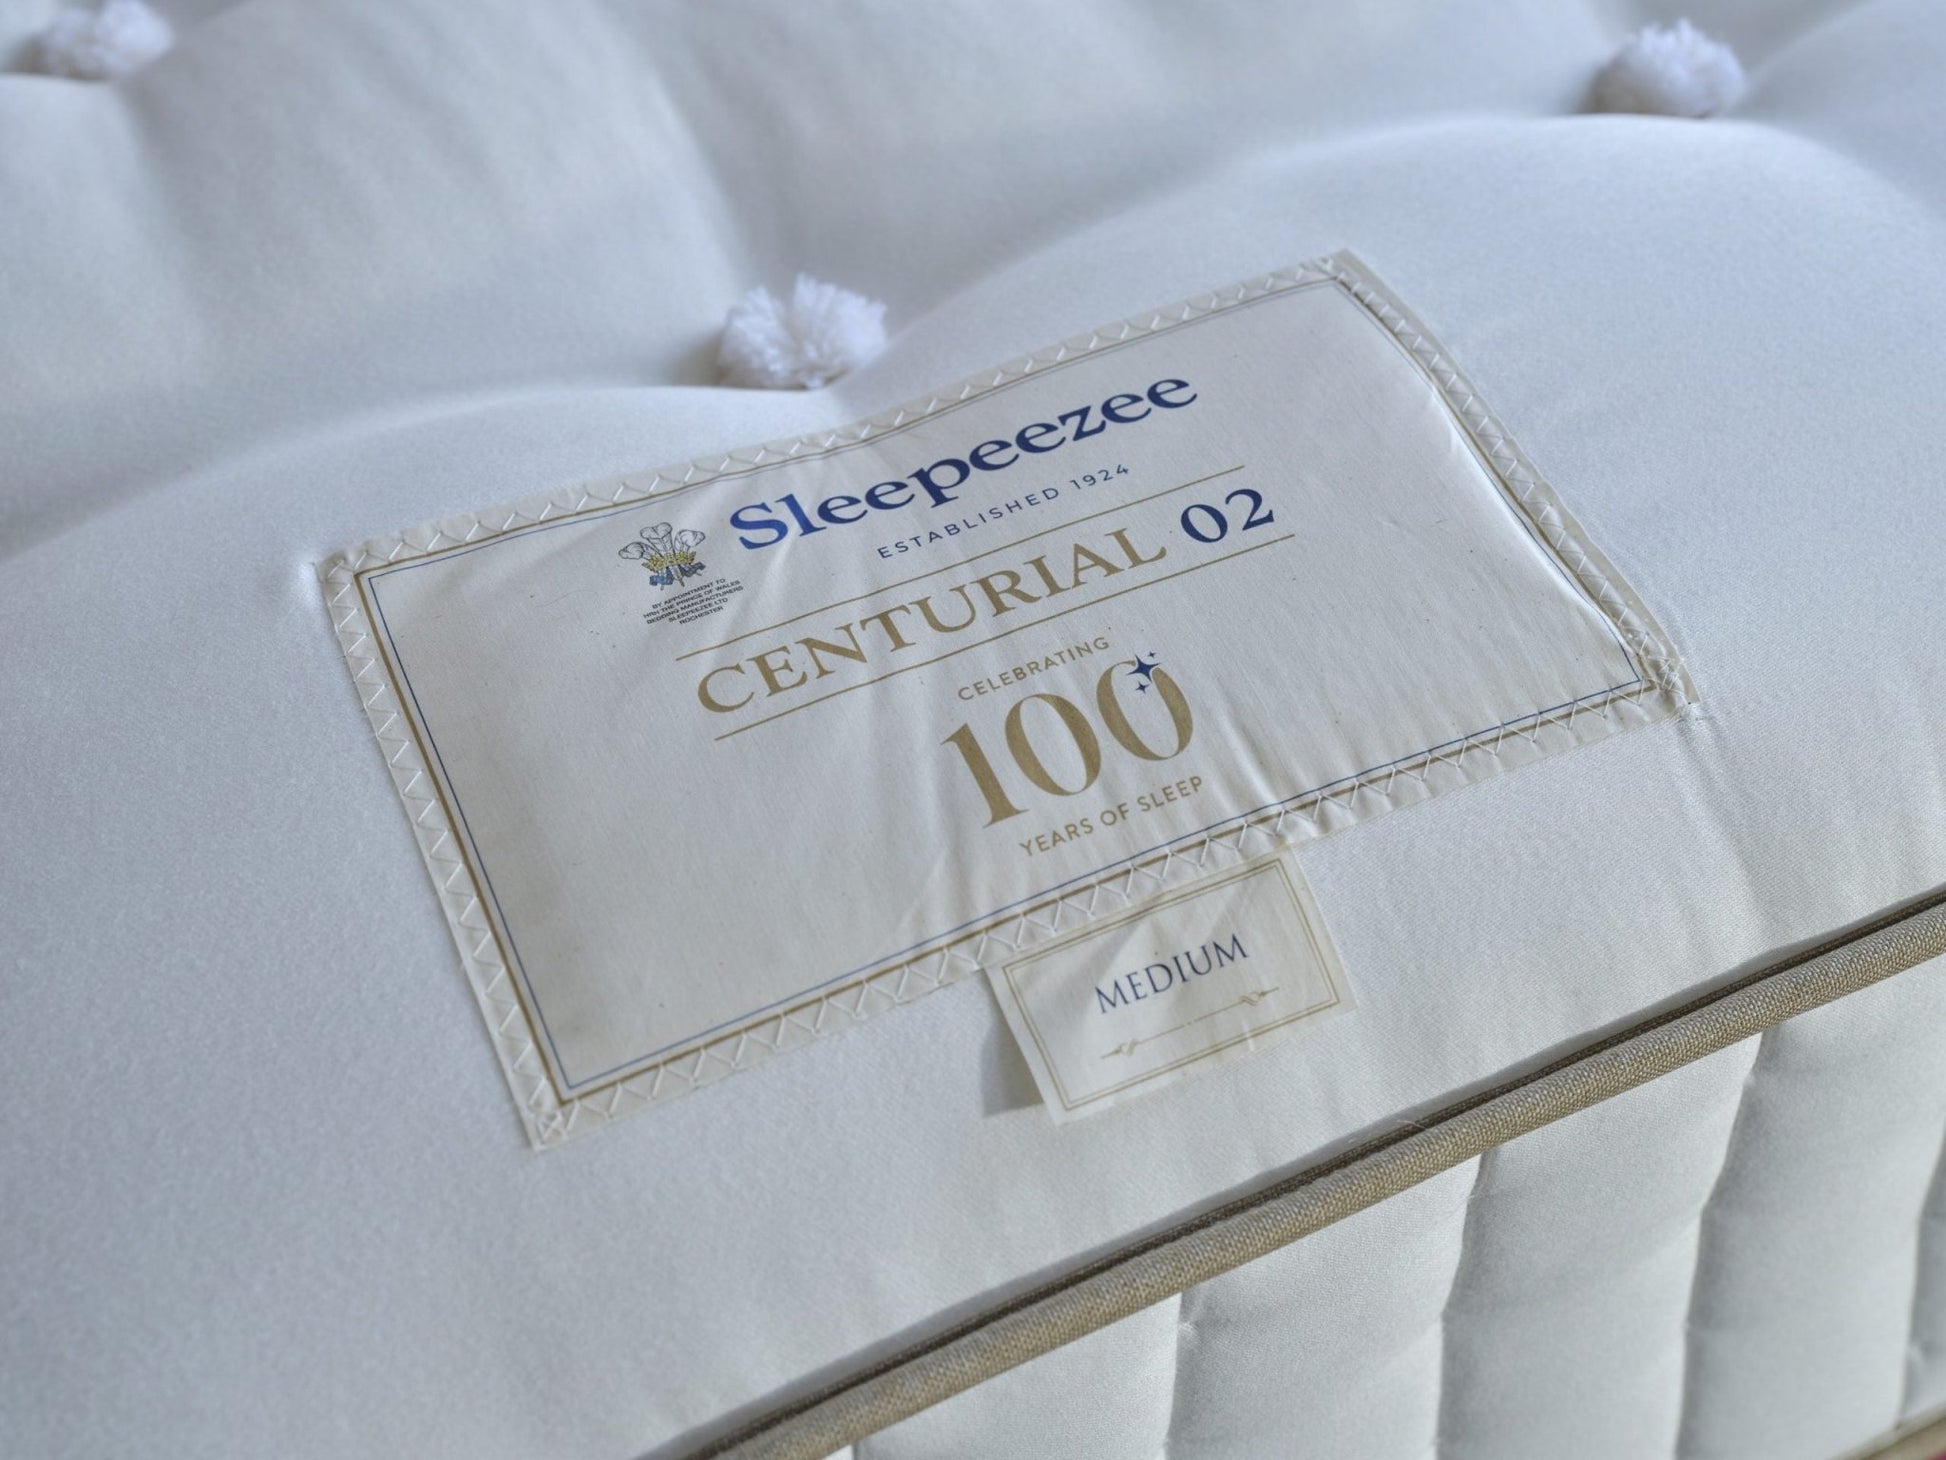 Sleepeezee Centurial 02 - Centurial Collection - TV Beds Northwest - kingmattress - singlemattress